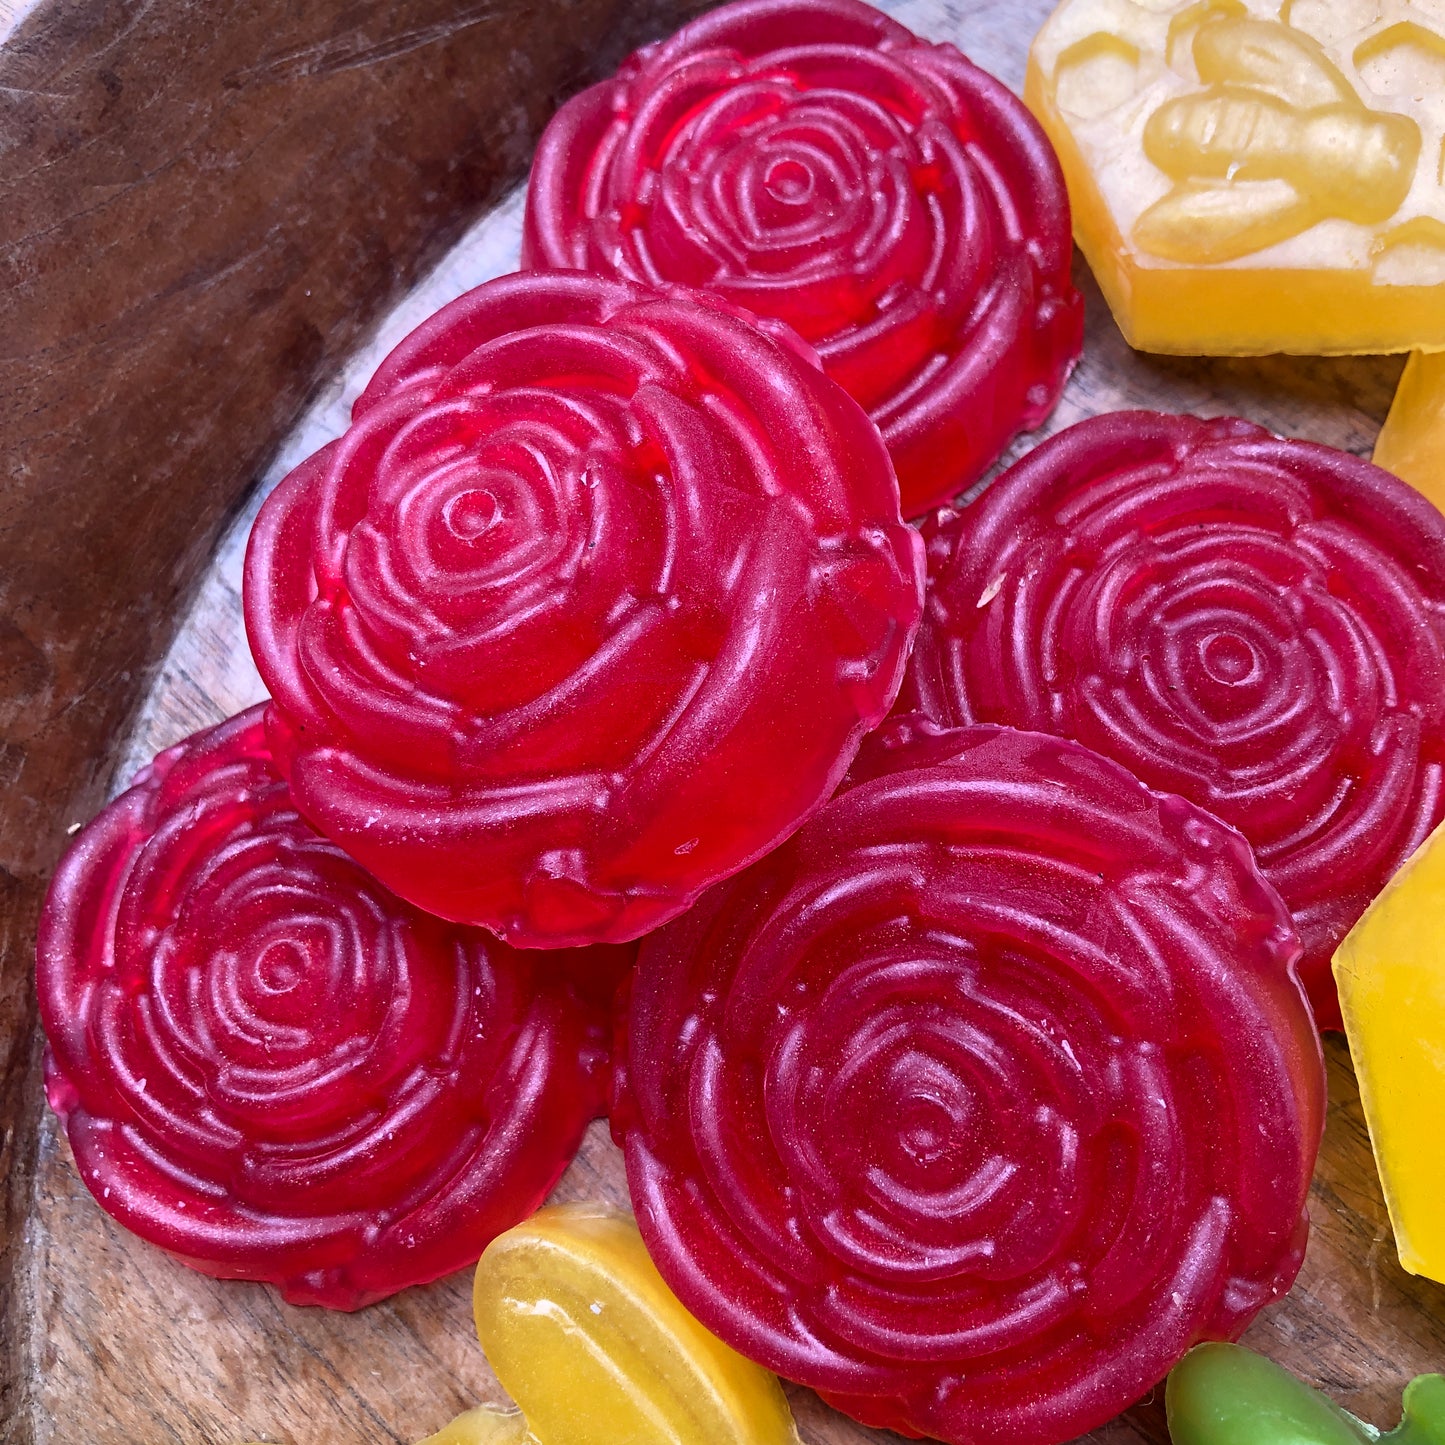 Rose soaps set of 5, Choose your favorite scent